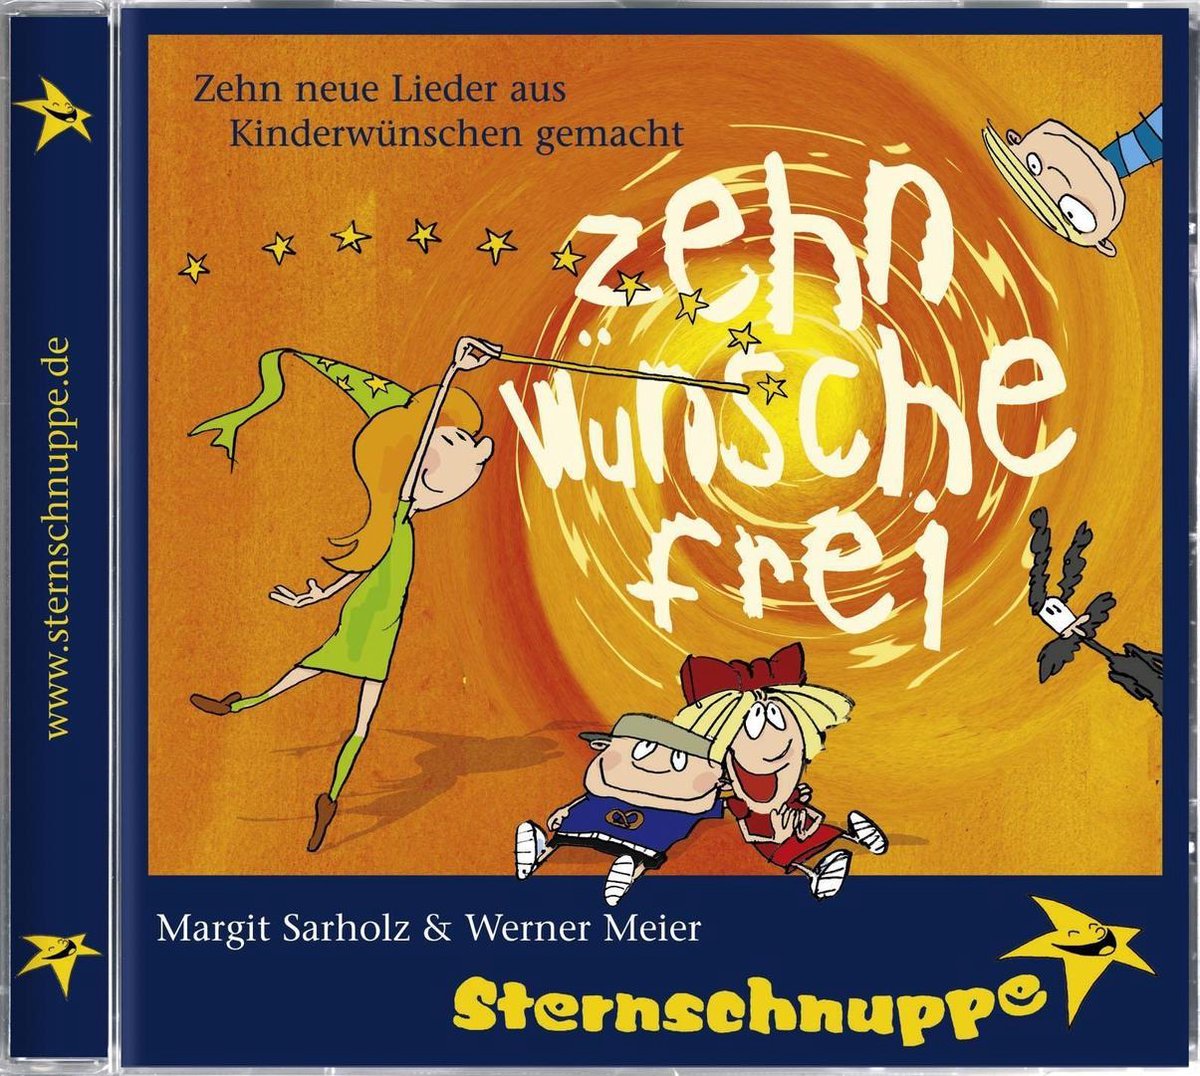 Alive AG Zehn Wünsche frei CD Children's music